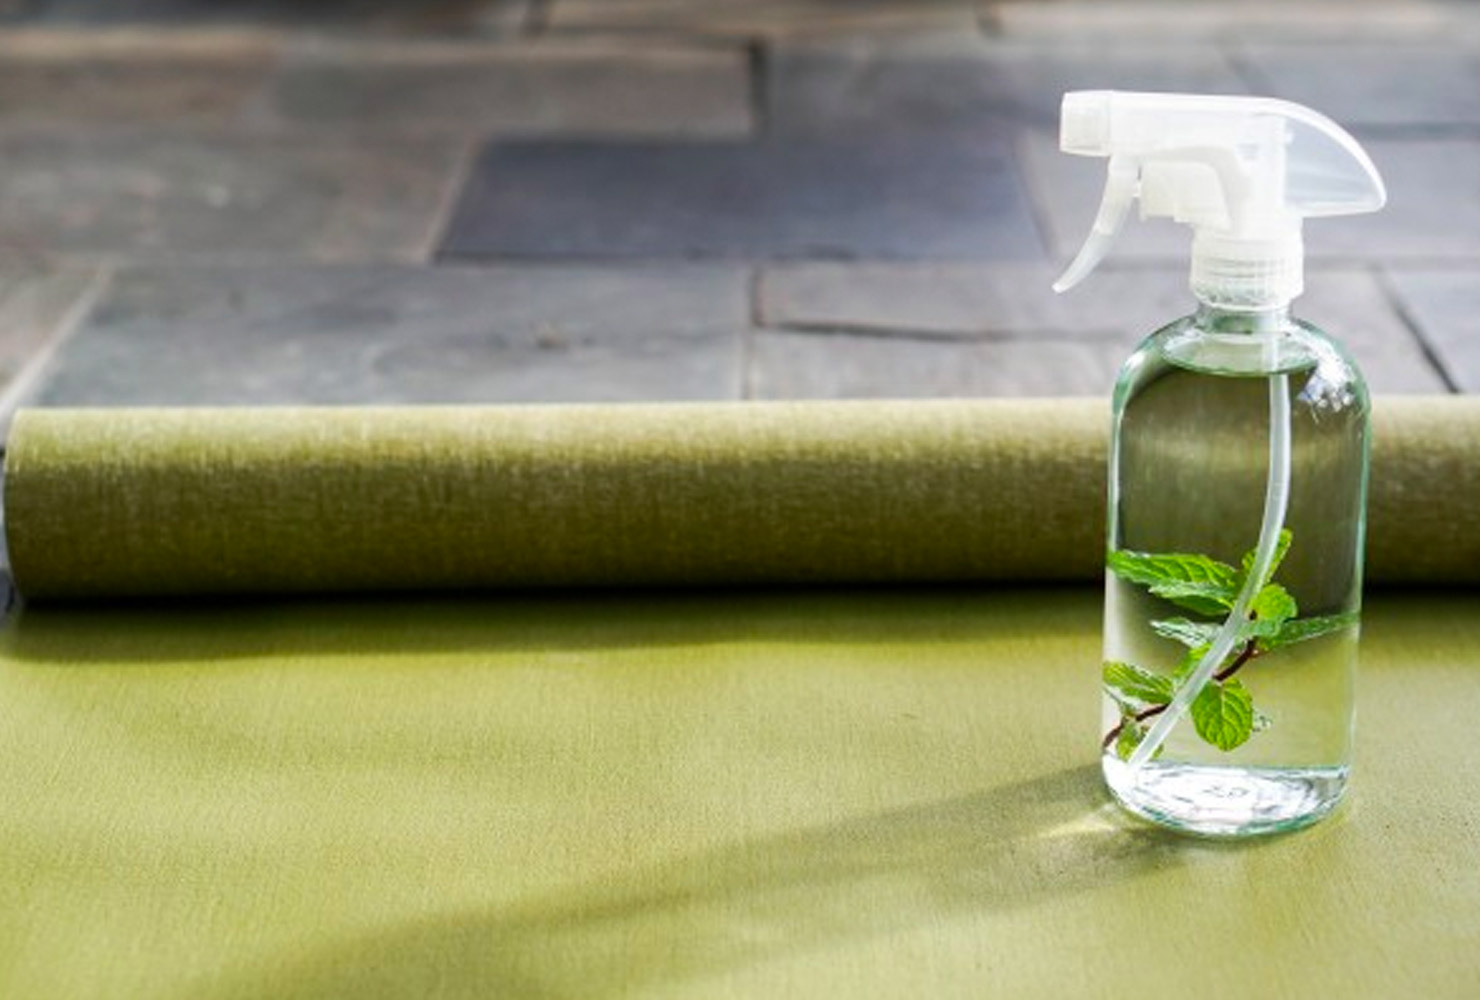 Clear spray bottle on green yoga mat.